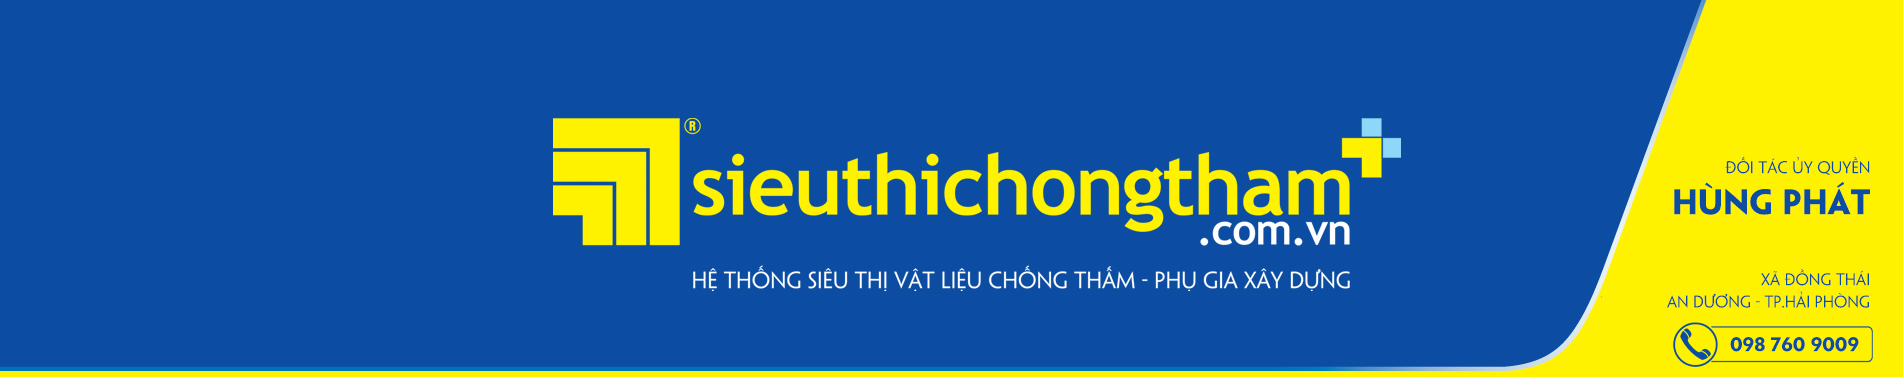 Hung Phat Banner